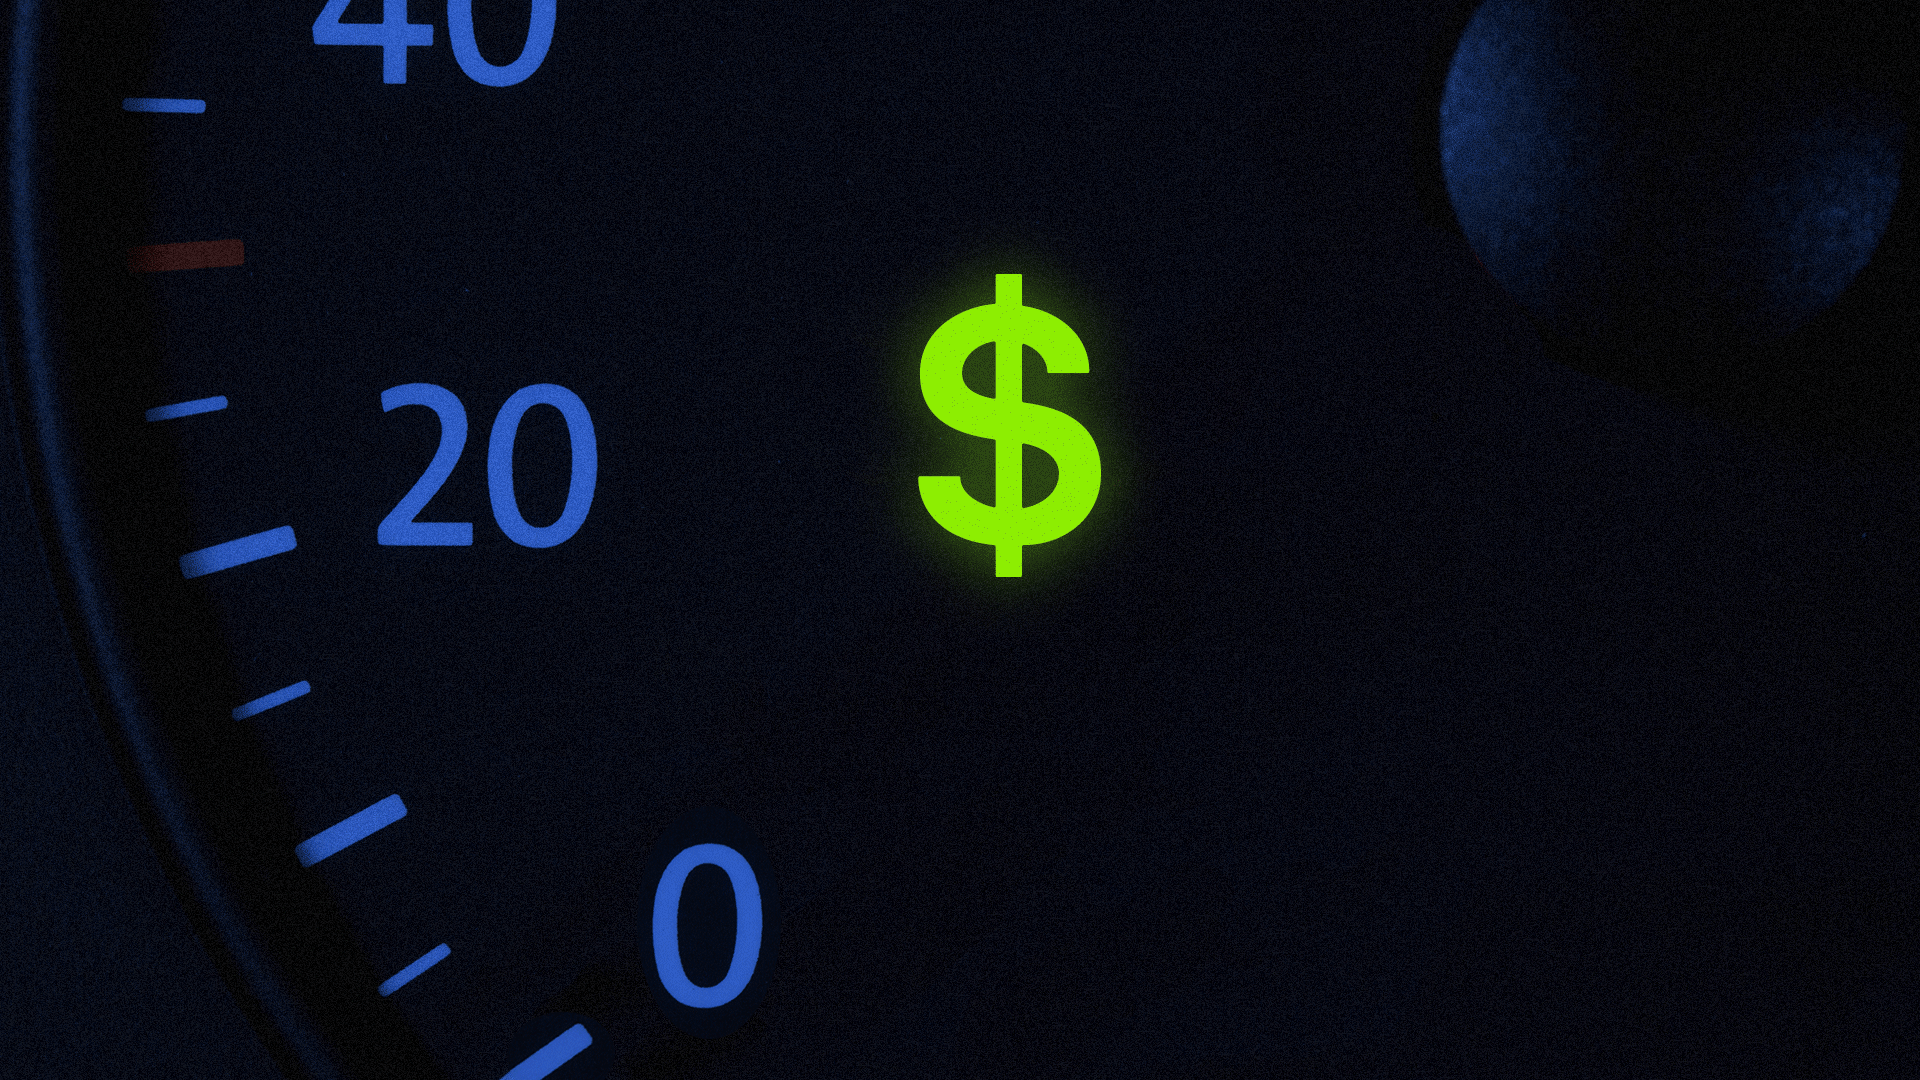 Illustration of a car blinker light shaped like a dollar bill sign. 